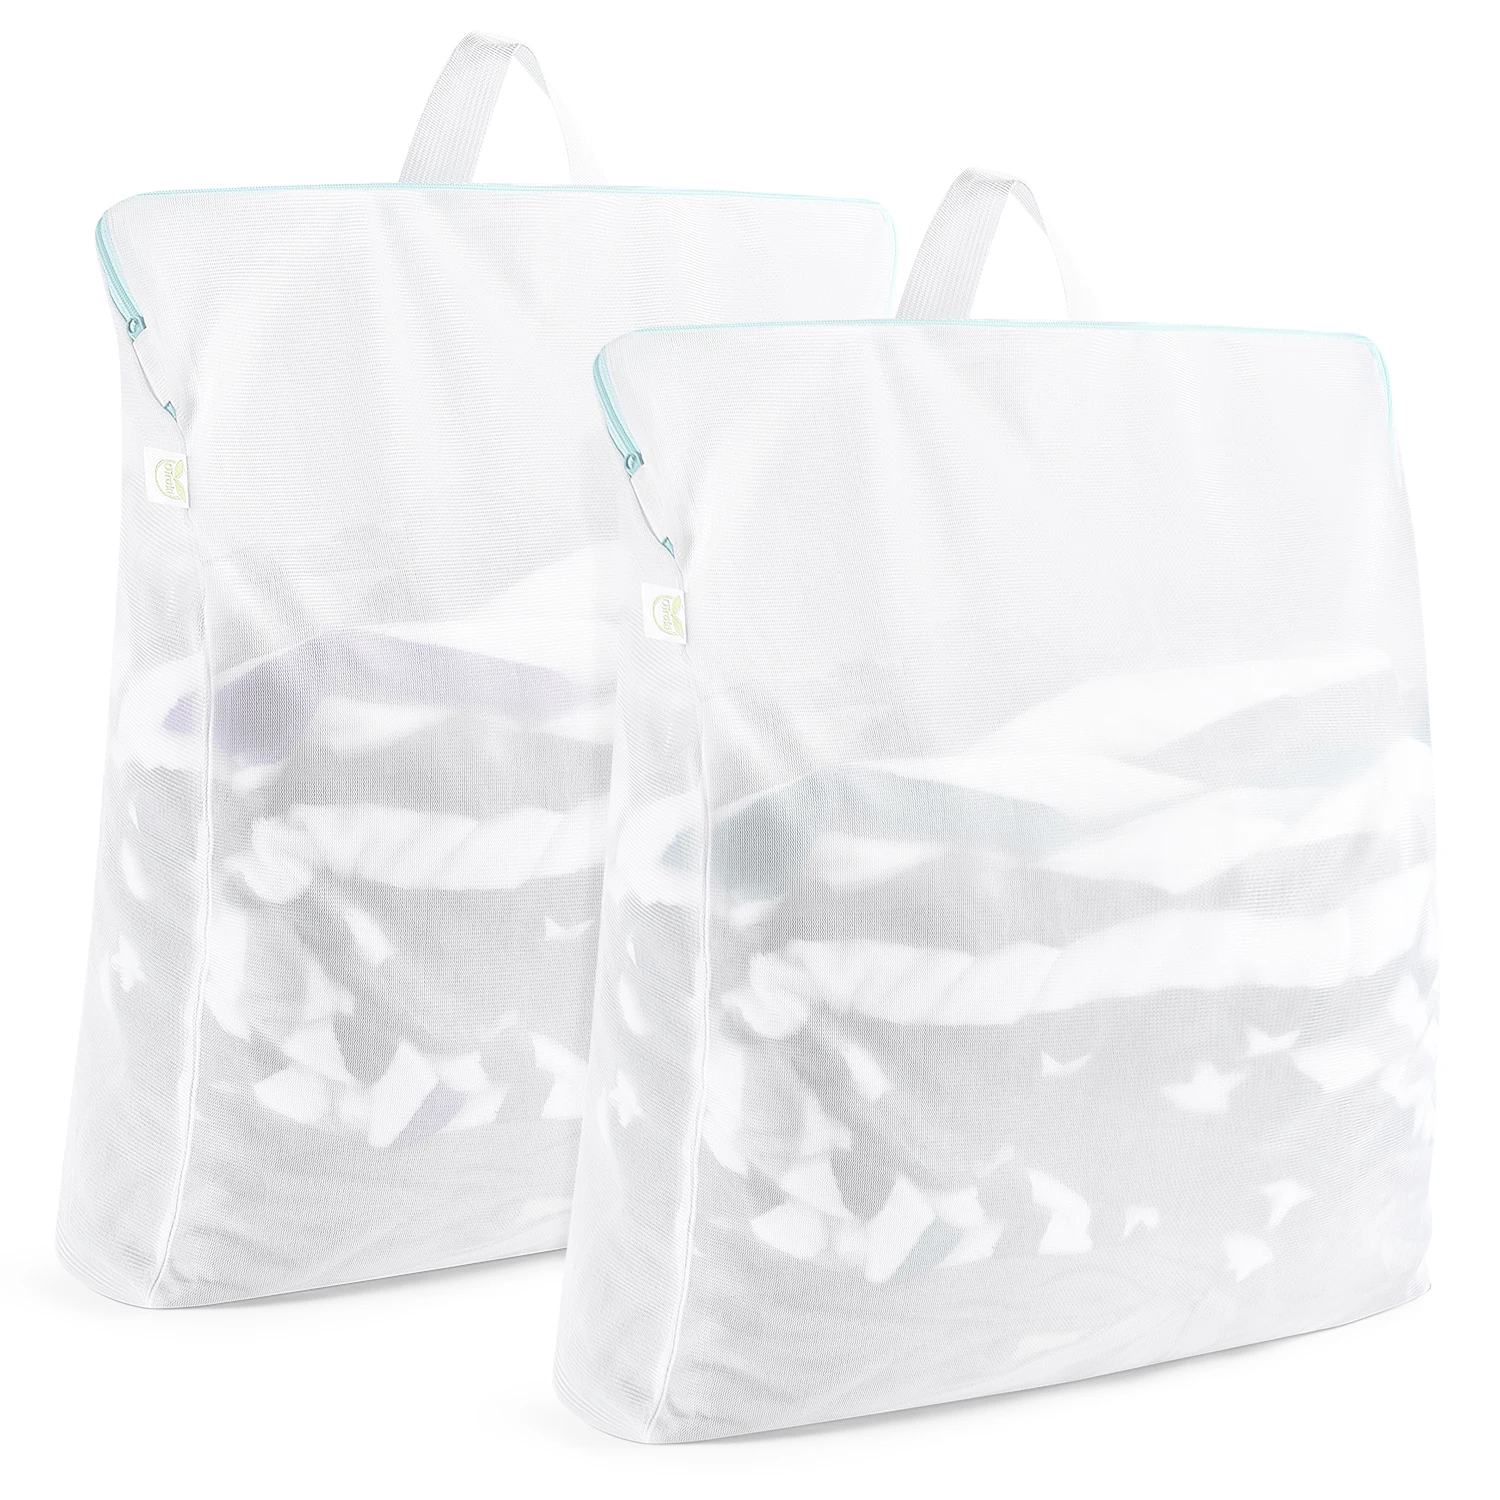 OTraki 2 pcs Mesh Laundry Bag Polyester Home Organizer Coarse Net Laundry Basket Laundry Bags for Washing Machines Mesh Bra Bag